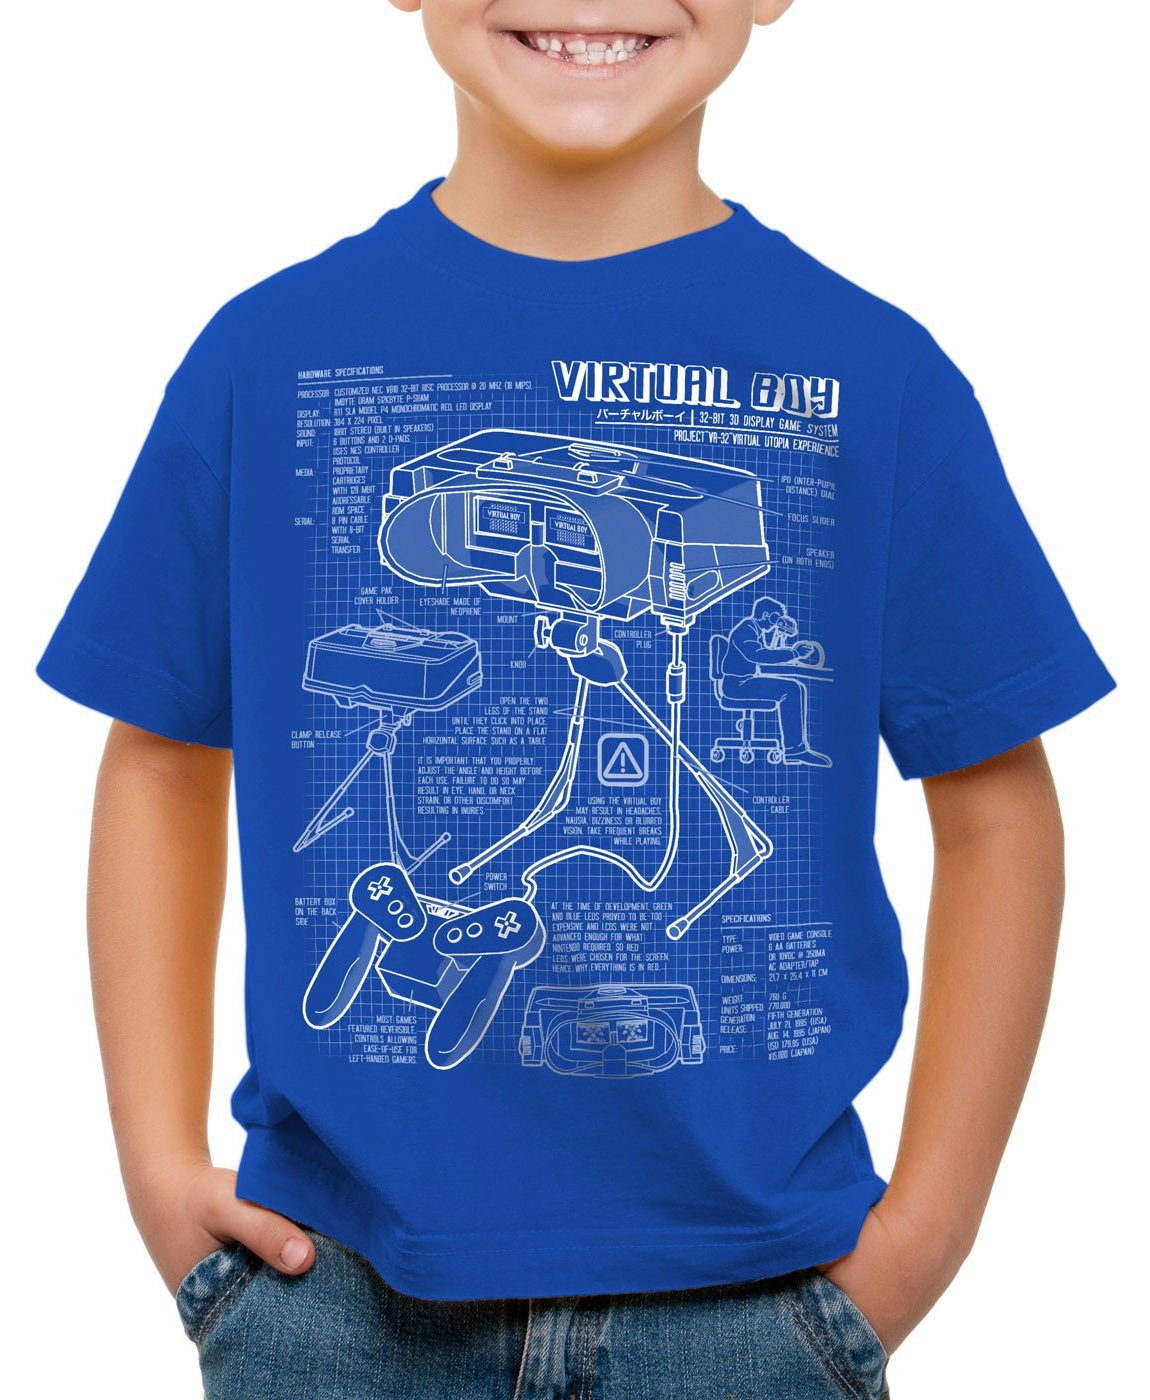 style3 Print-Shirt Kinder T-Shirt Virtual Boy Blaupause 32-Bit videospiel controller